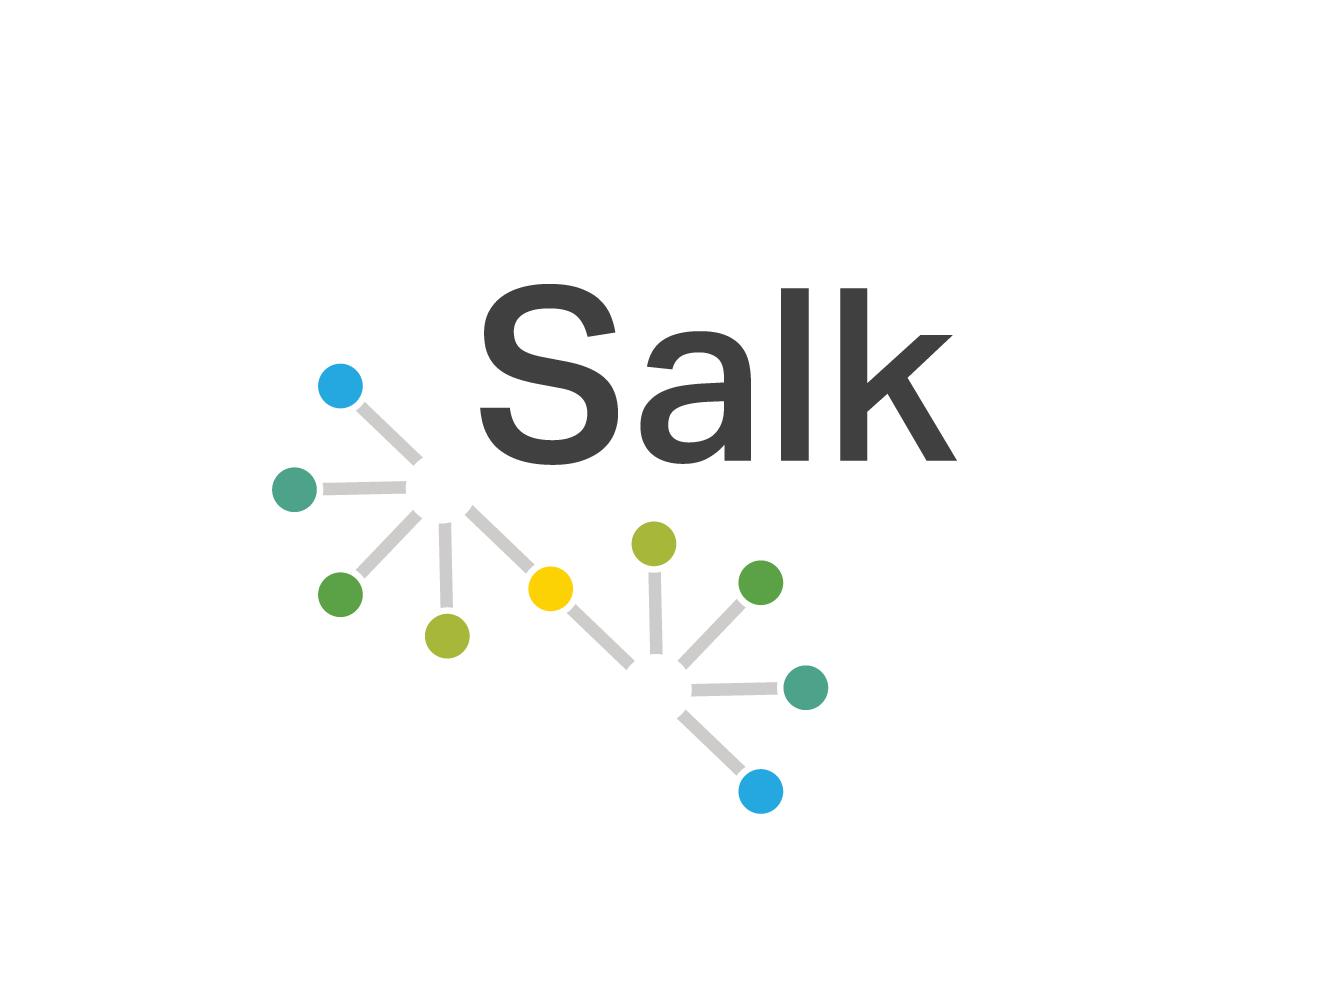 Salk Institute logo by Emily Gilles on Dribbble